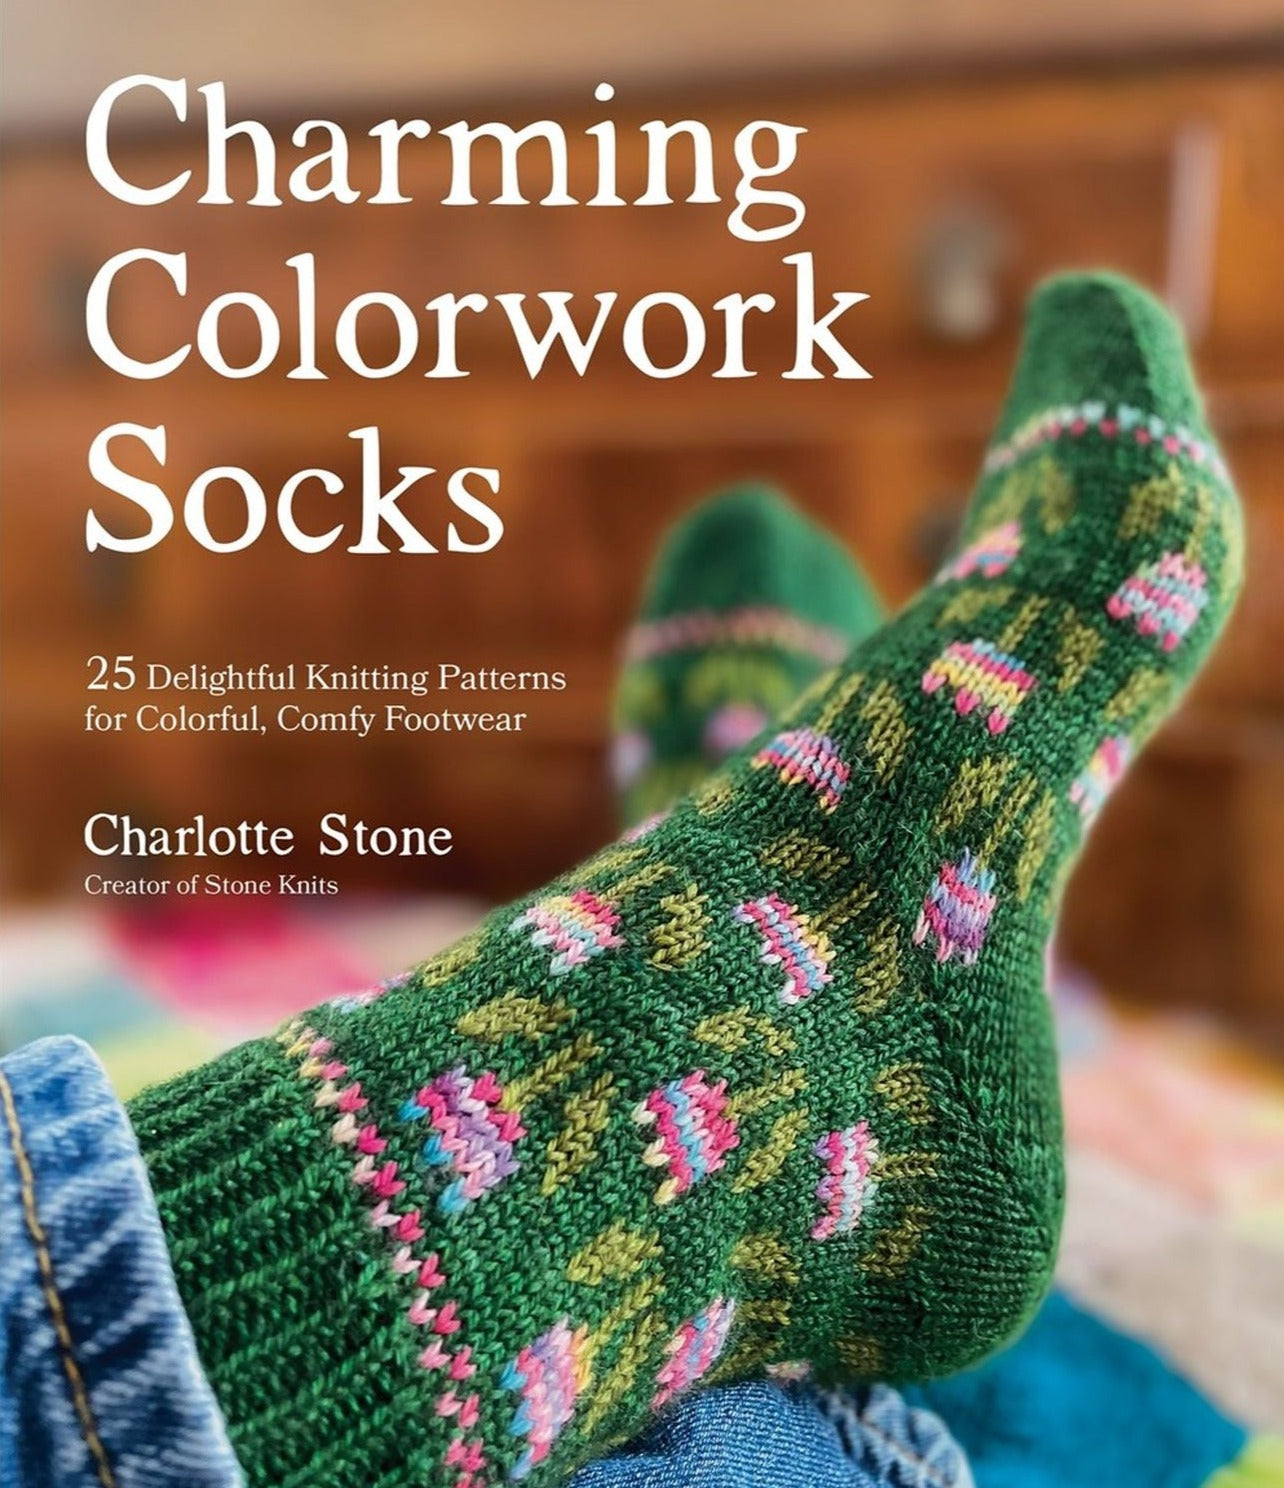 Charming colorwork socks